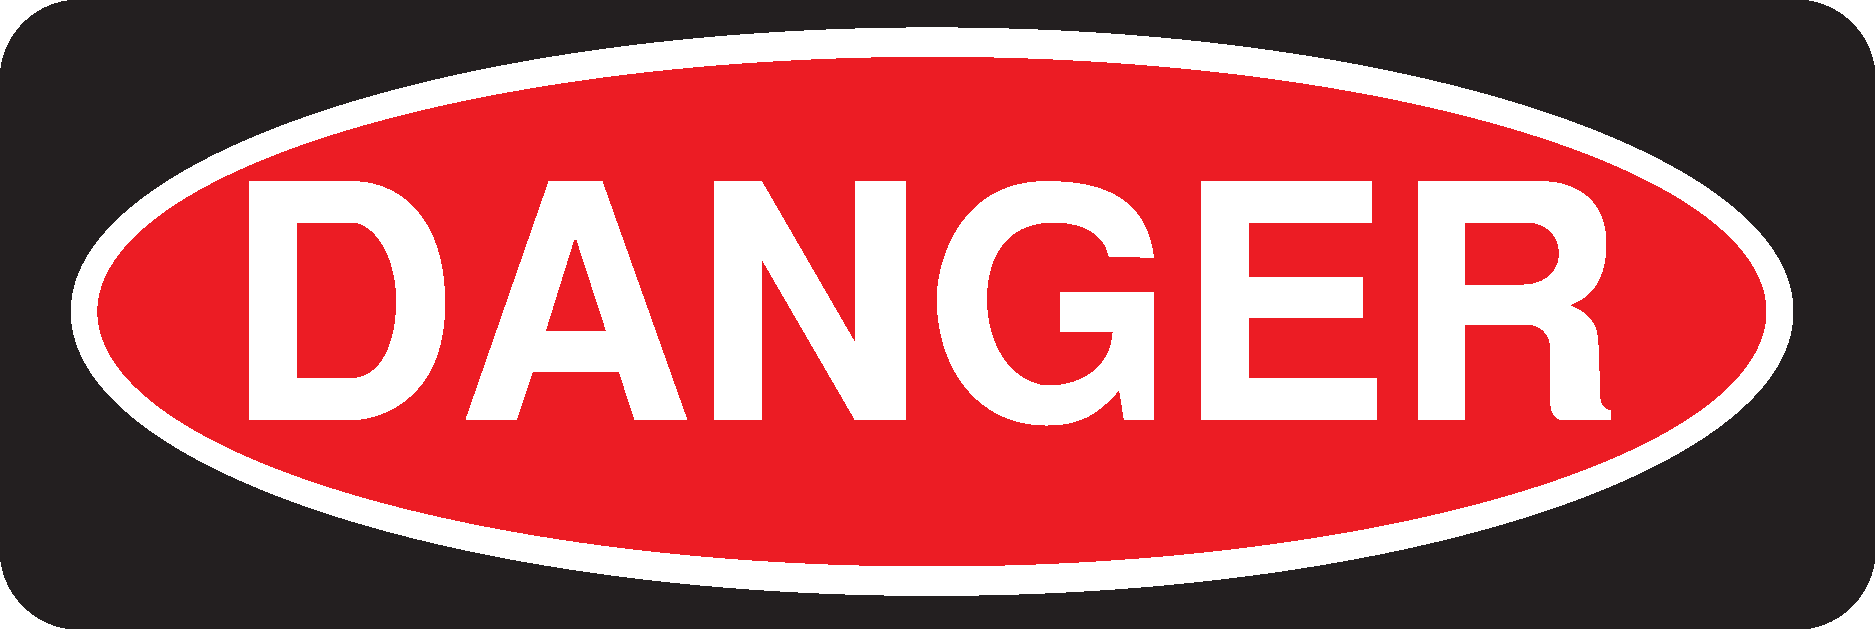 Danger FC logo by crozzager on DeviantArt